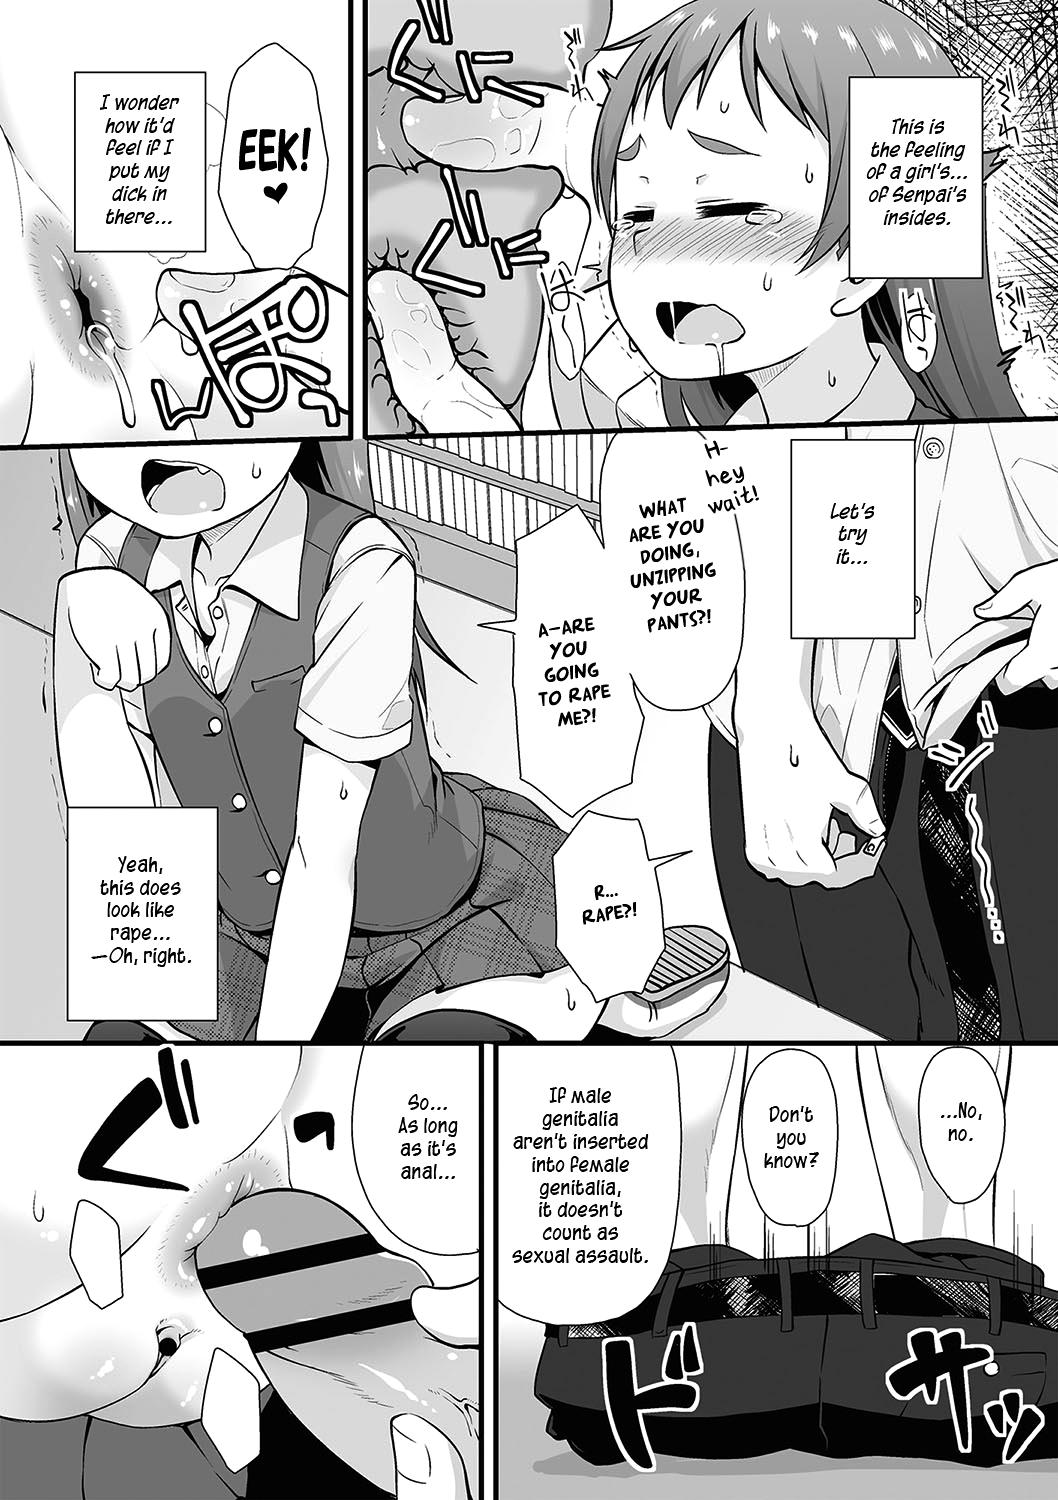 Flashing Manga Club Activity Log  - Page 10